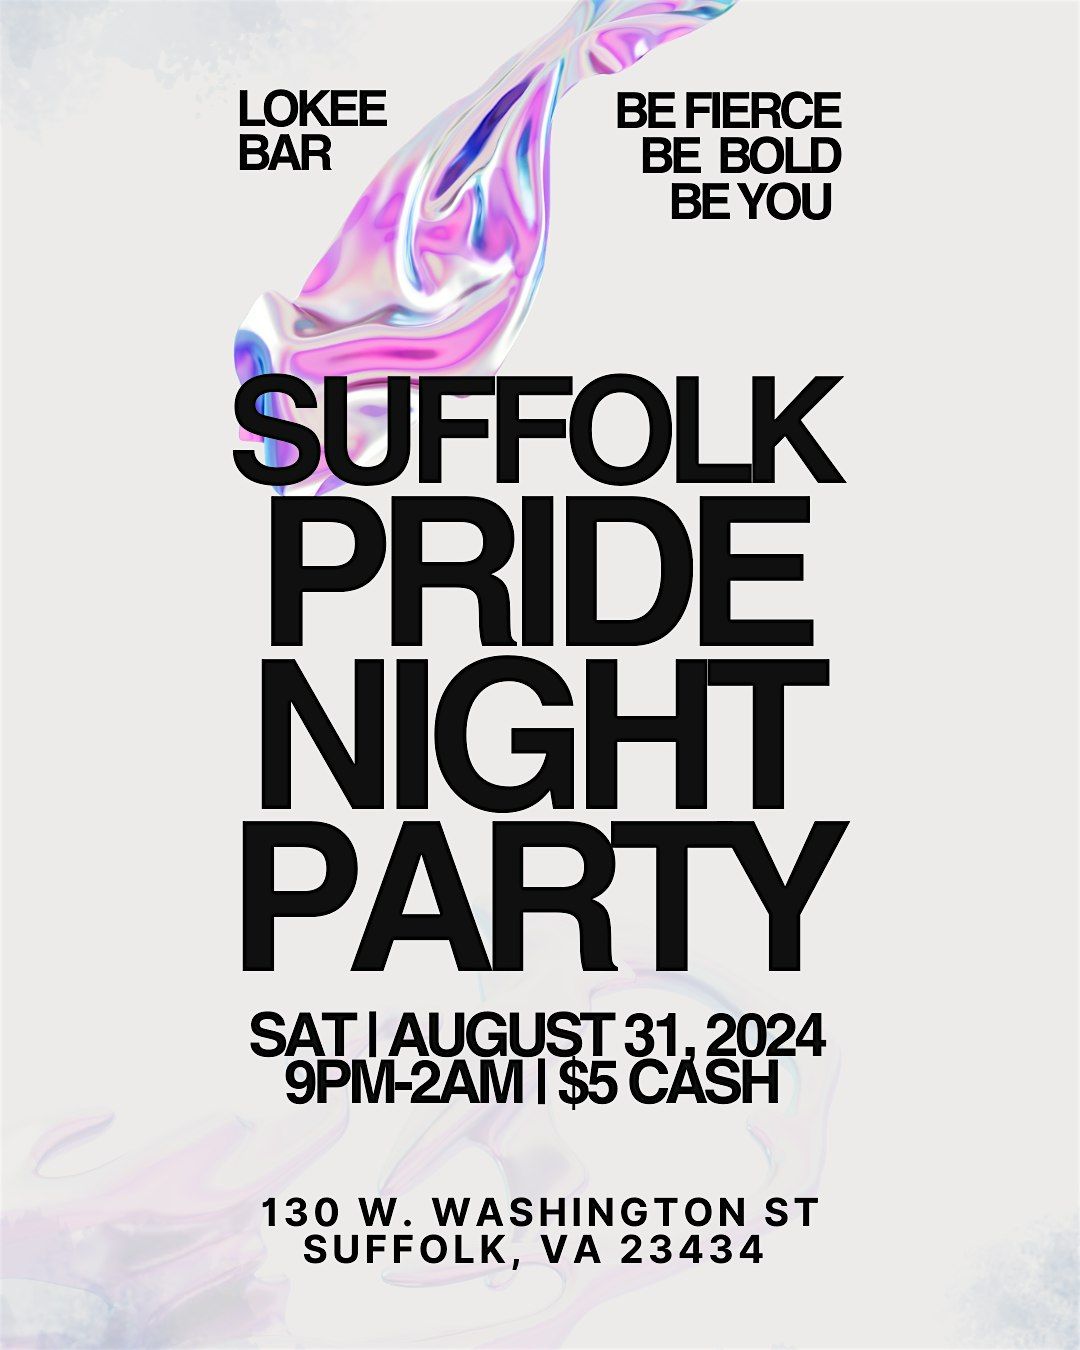 Suffolk Pride Night @ Lokee Bar